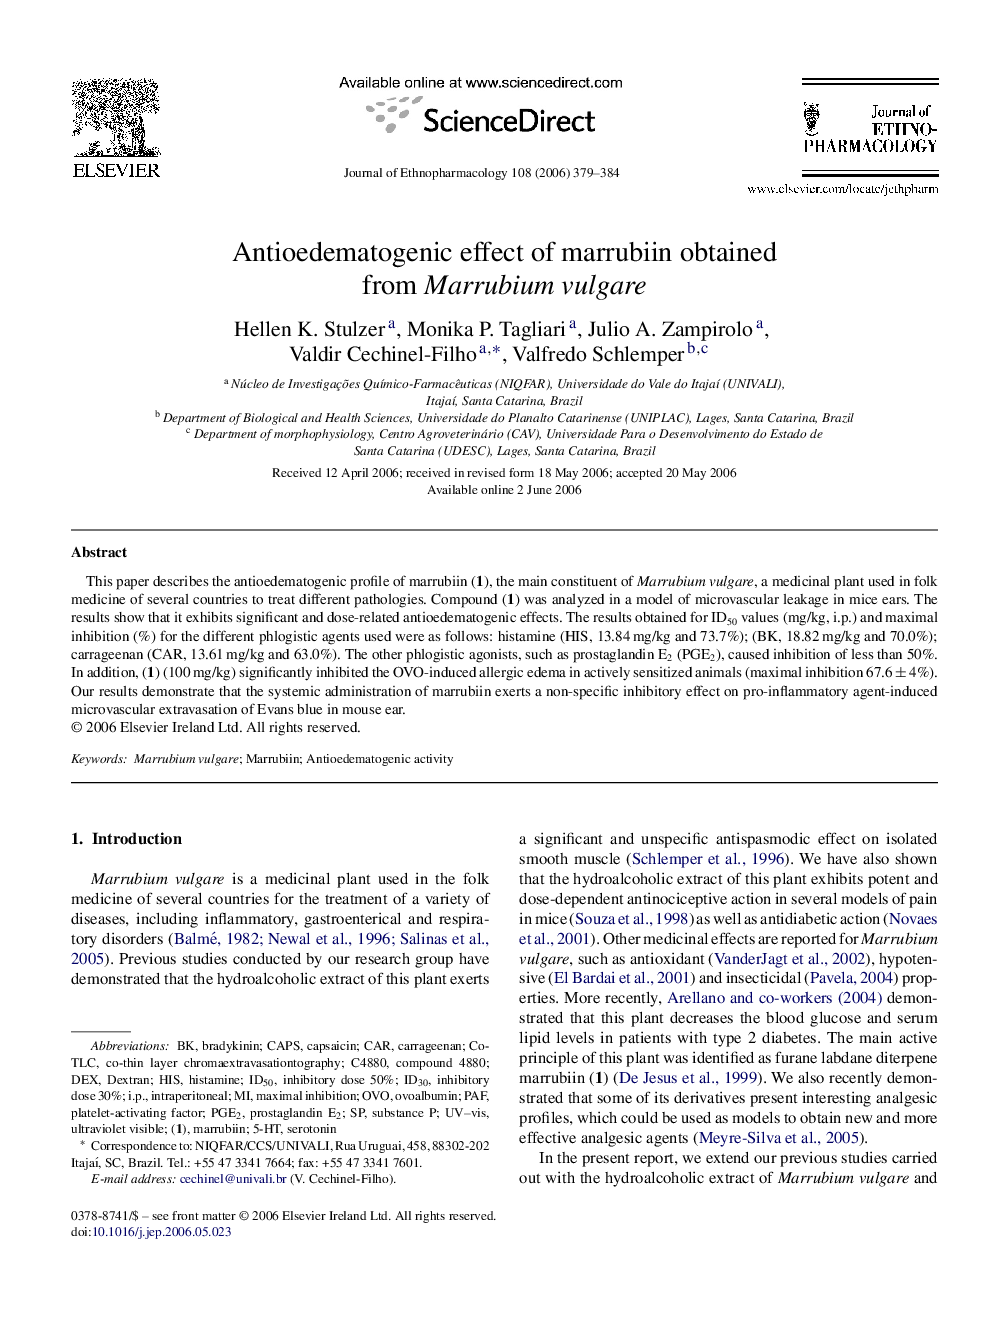 Antioedematogenic effect of marrubiin obtained from Marrubium vulgare